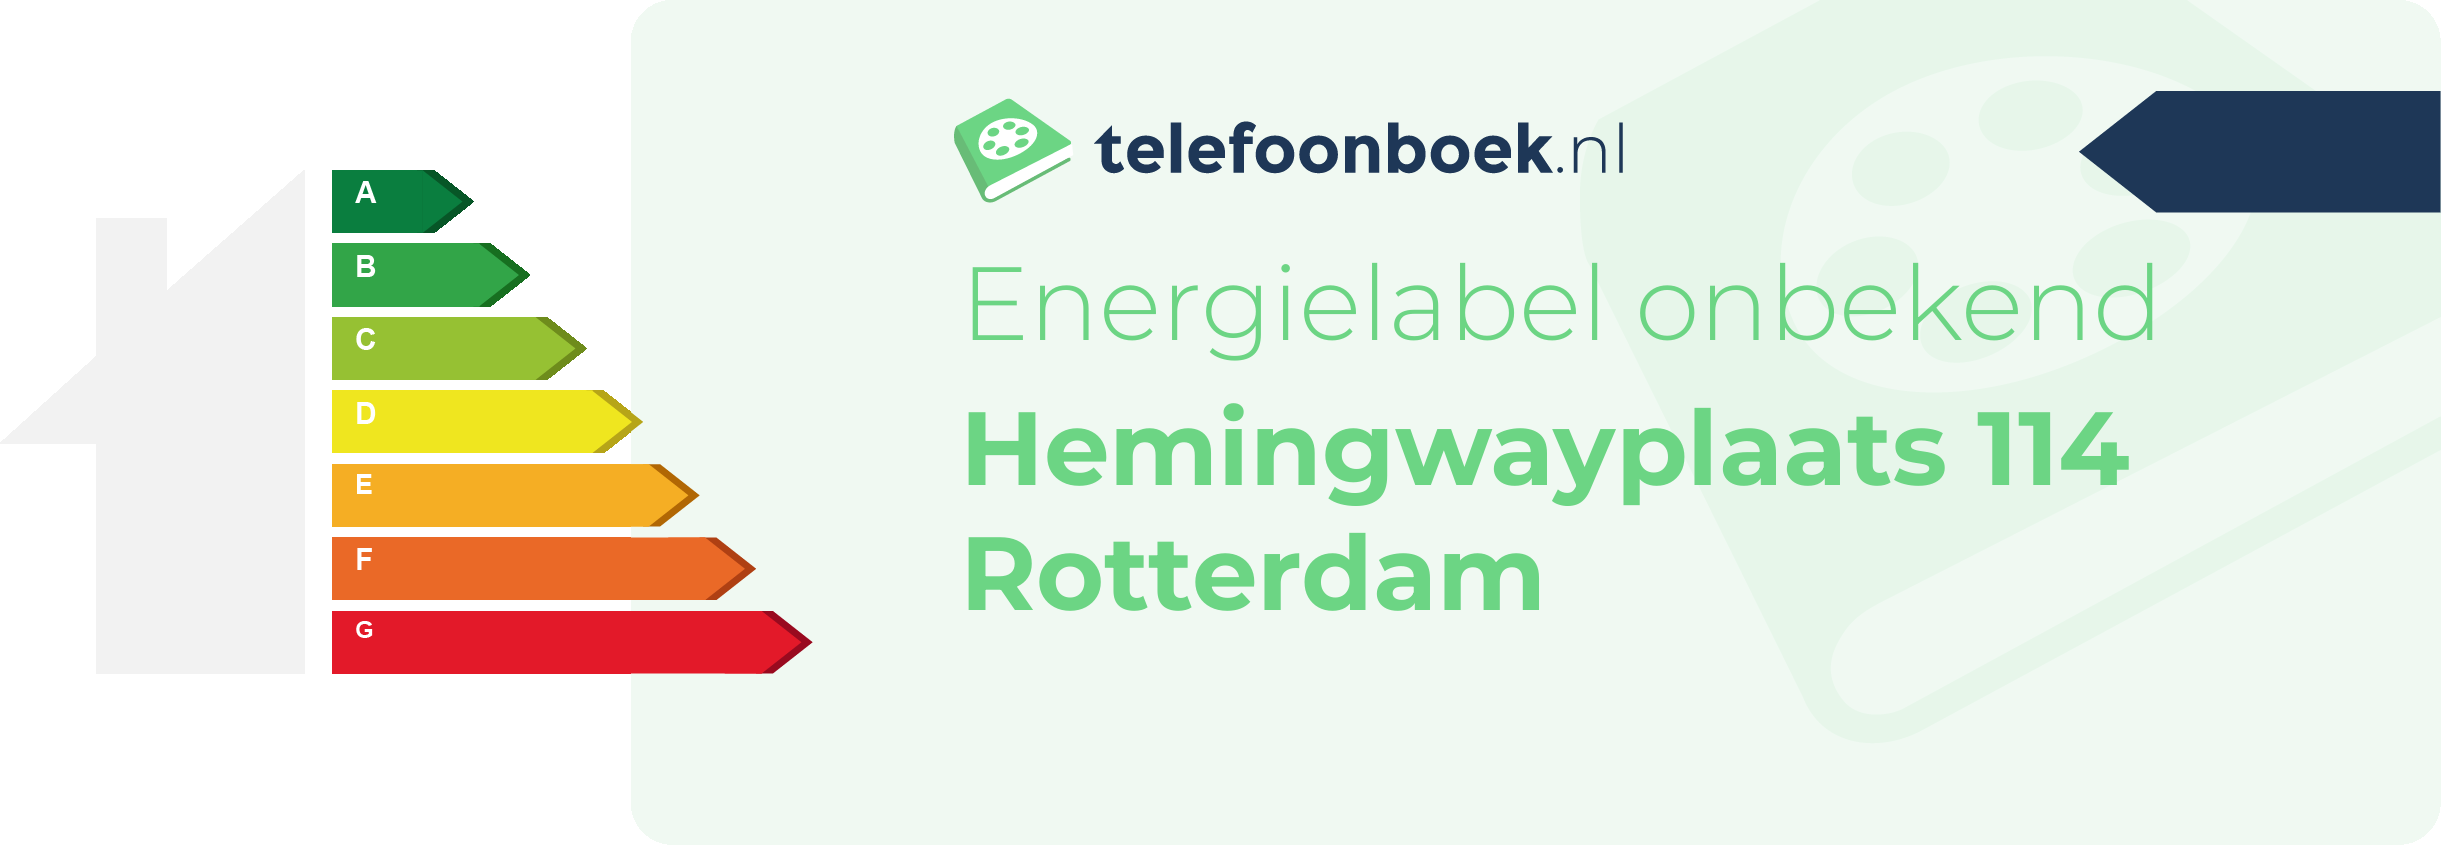 Energielabel Hemingwayplaats 114 Rotterdam